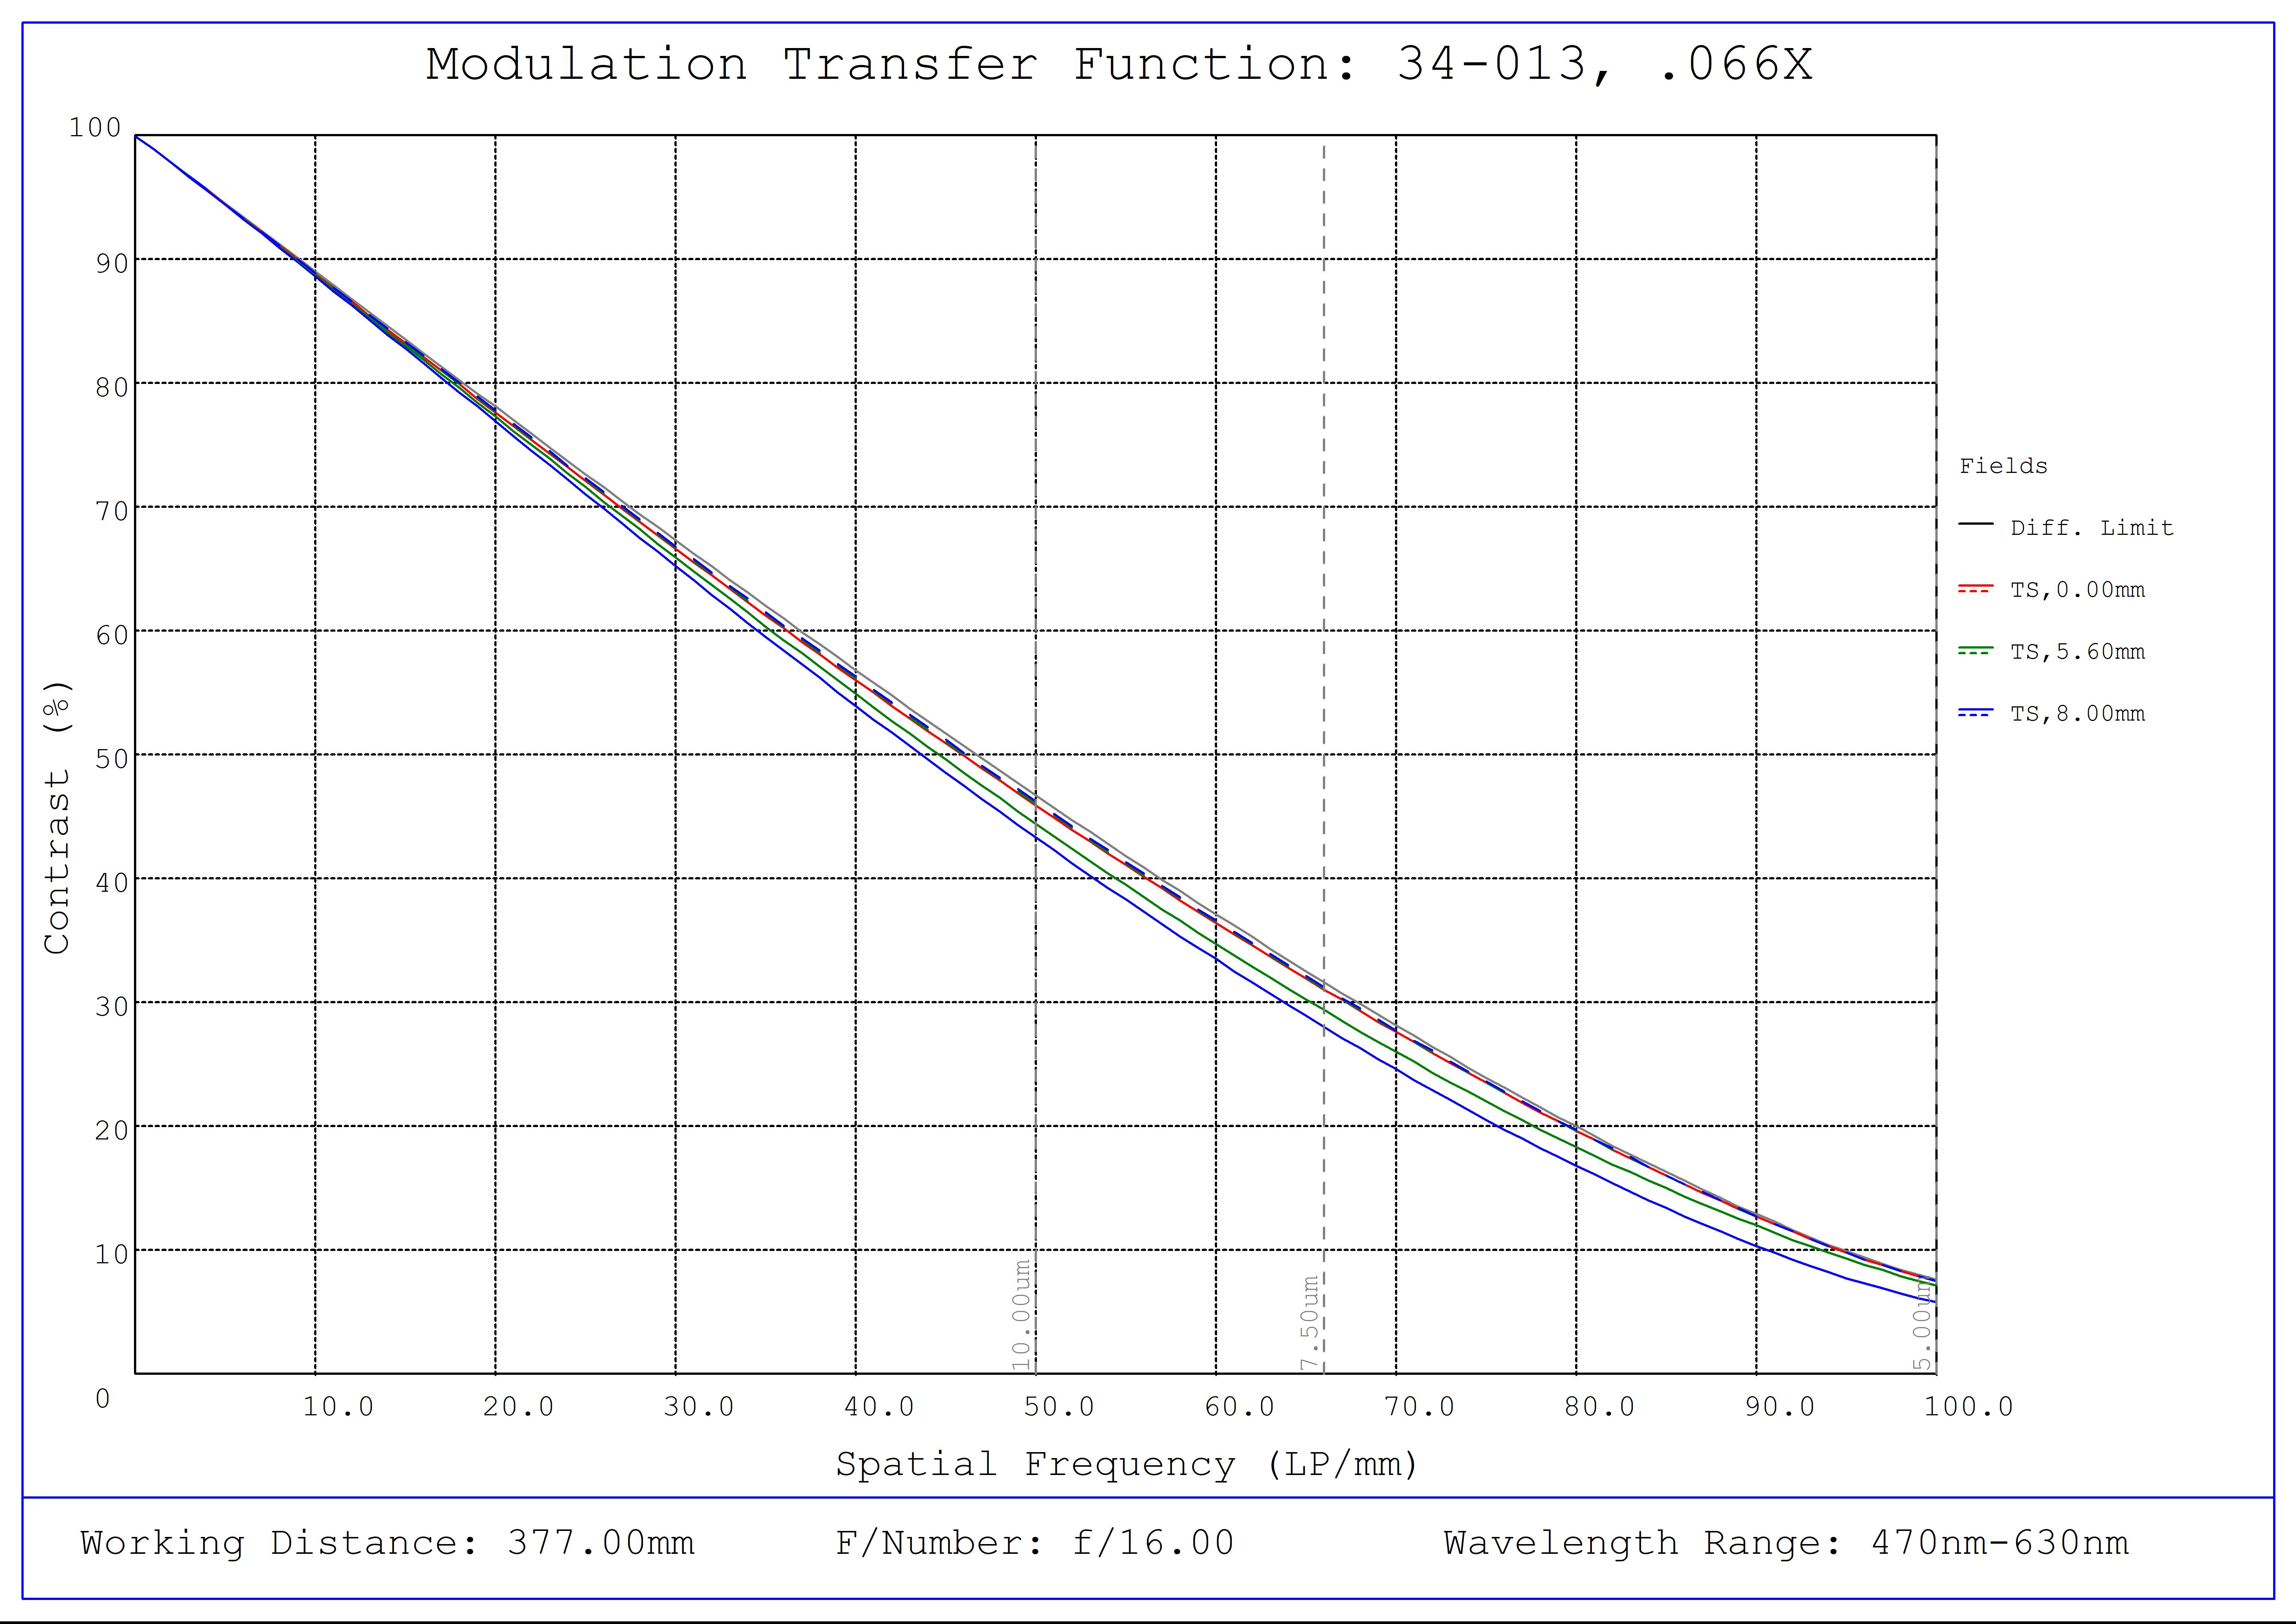 #34-013, 0.066X, 1" C-Mount TitanTL® Telecentric Lens, Modulated Transfer Function (MTF) Plot, 377mm Working Distance, f16